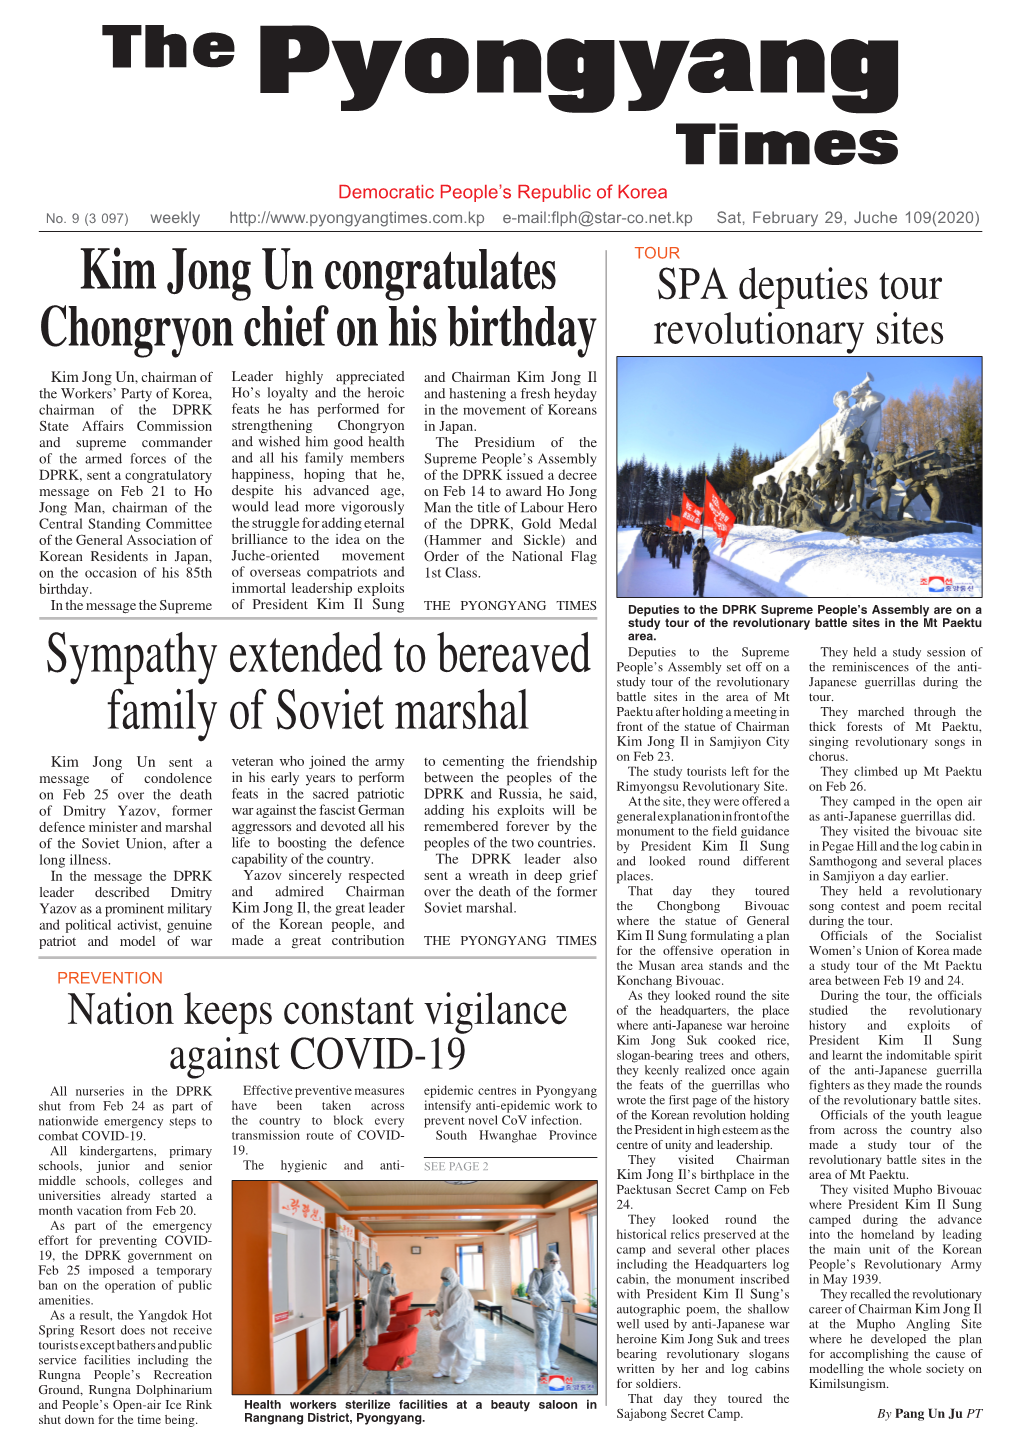 Kim Jong Uncongratulates Chongryon Chief on His Birthday Sympathy